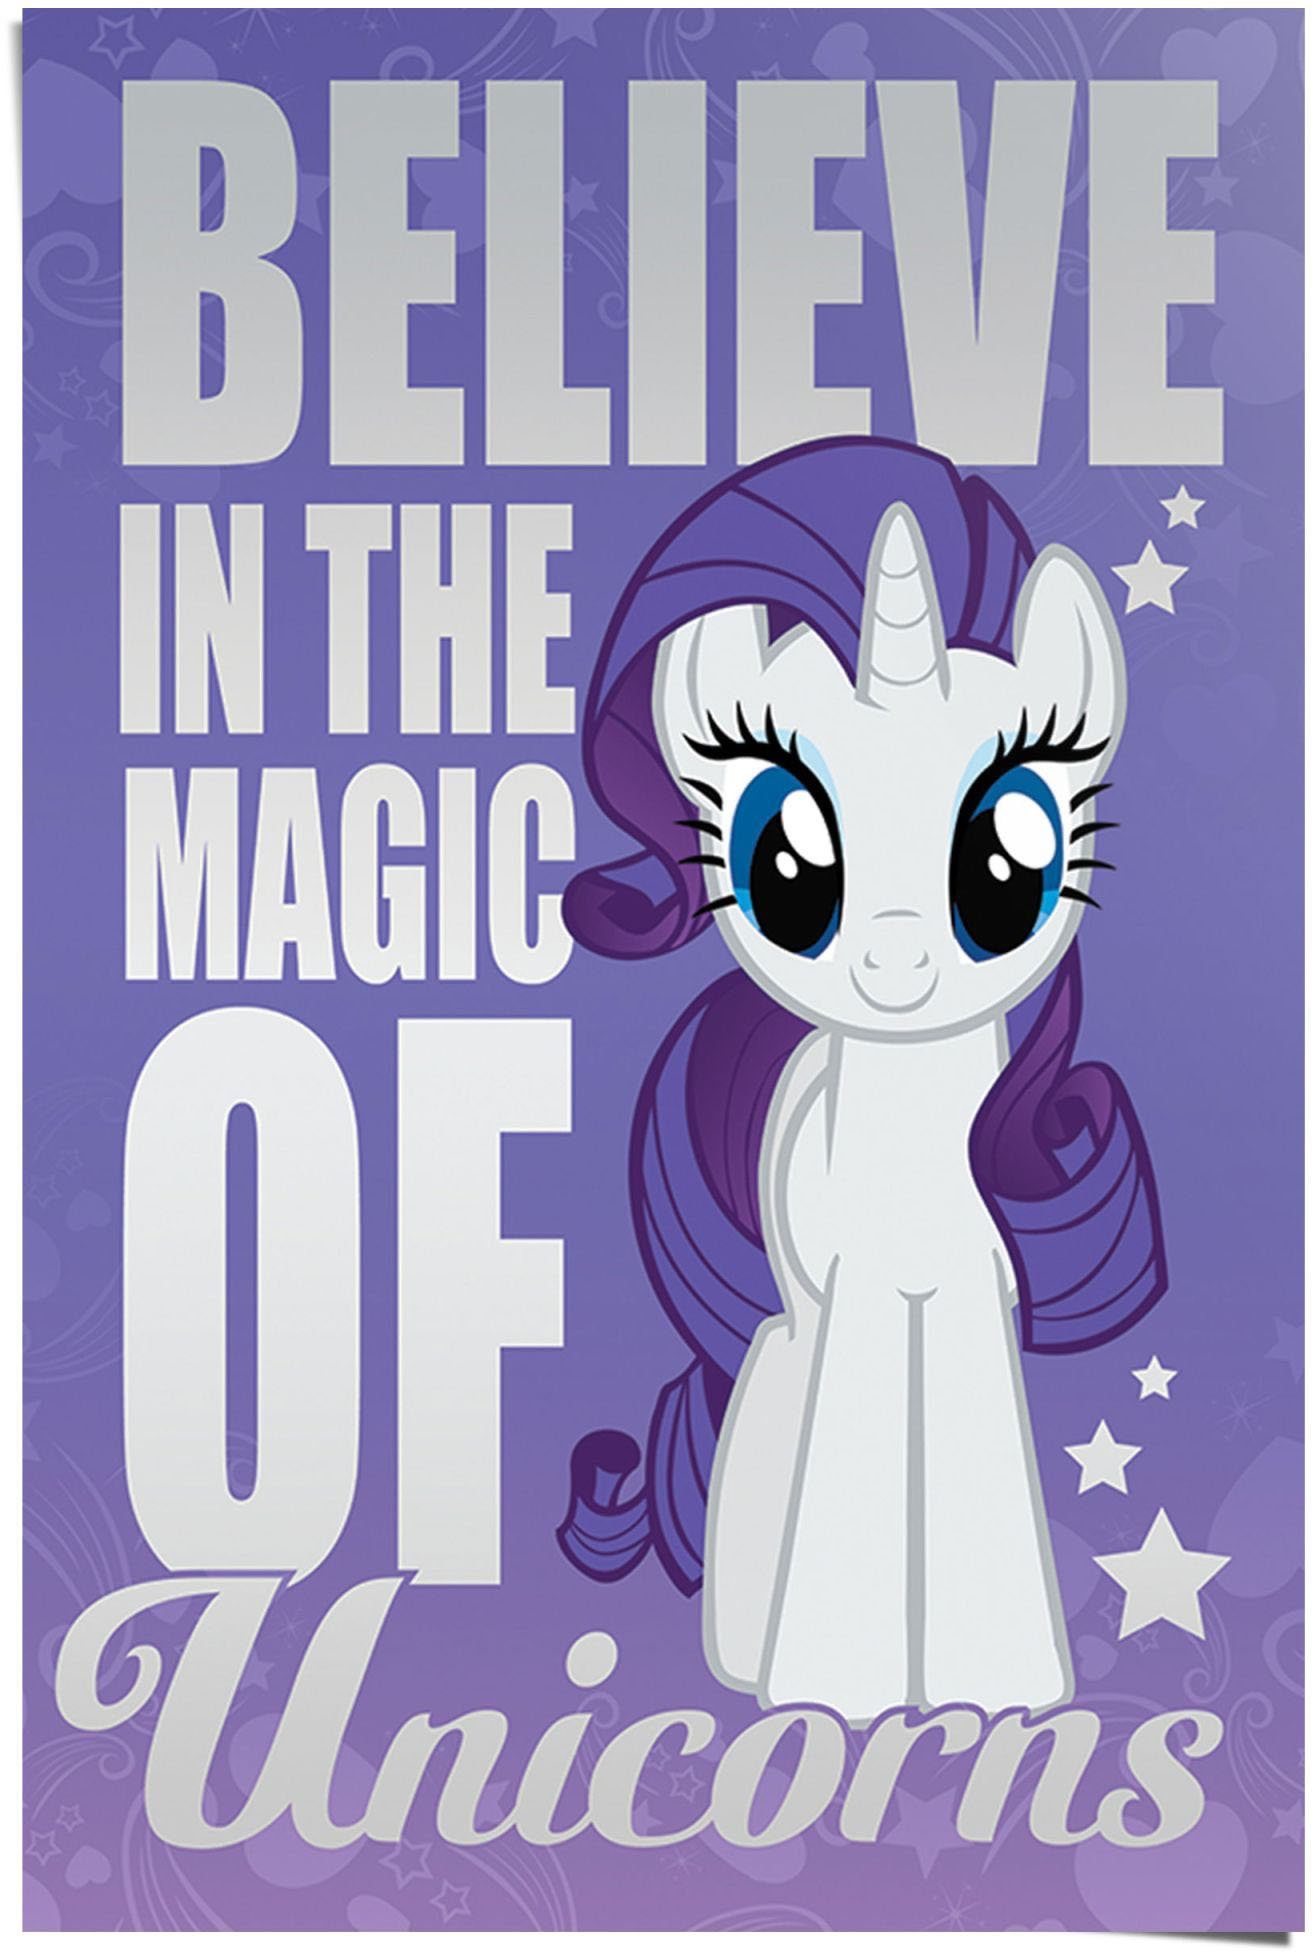 (1 Pony Poster Reinders! My St) little Unicorn,